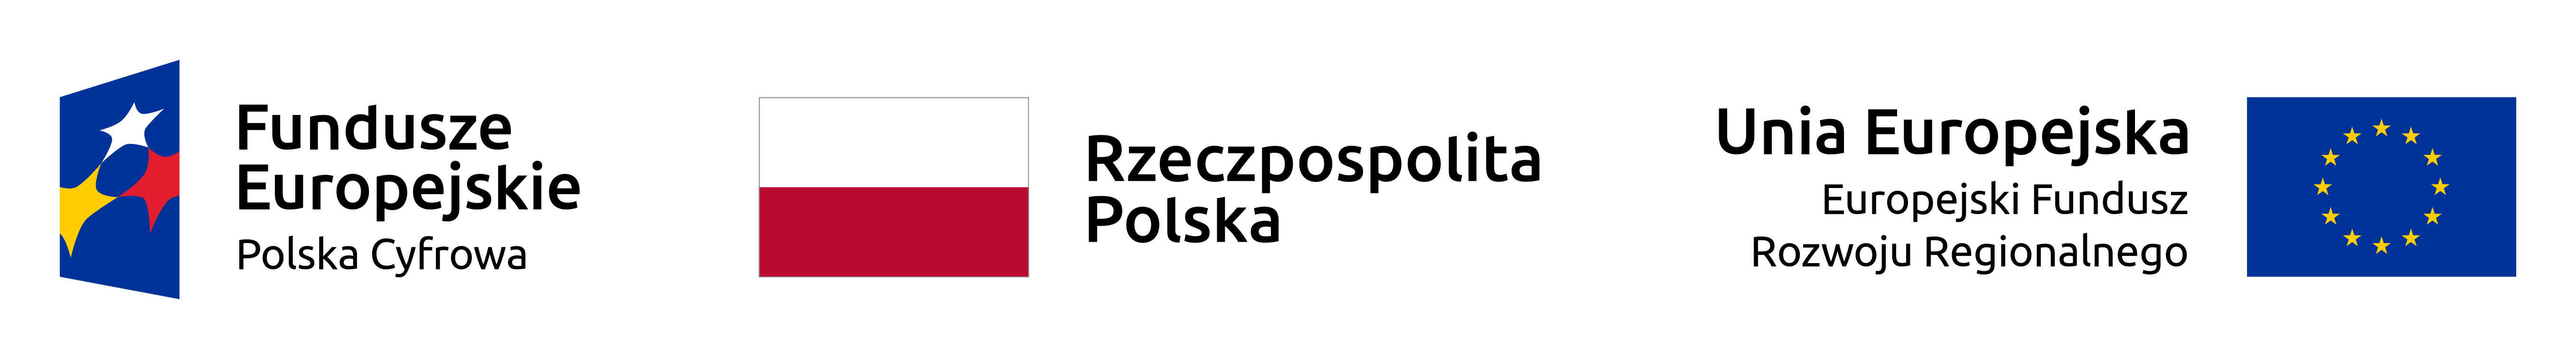 Cyfrowa Polska logotypy